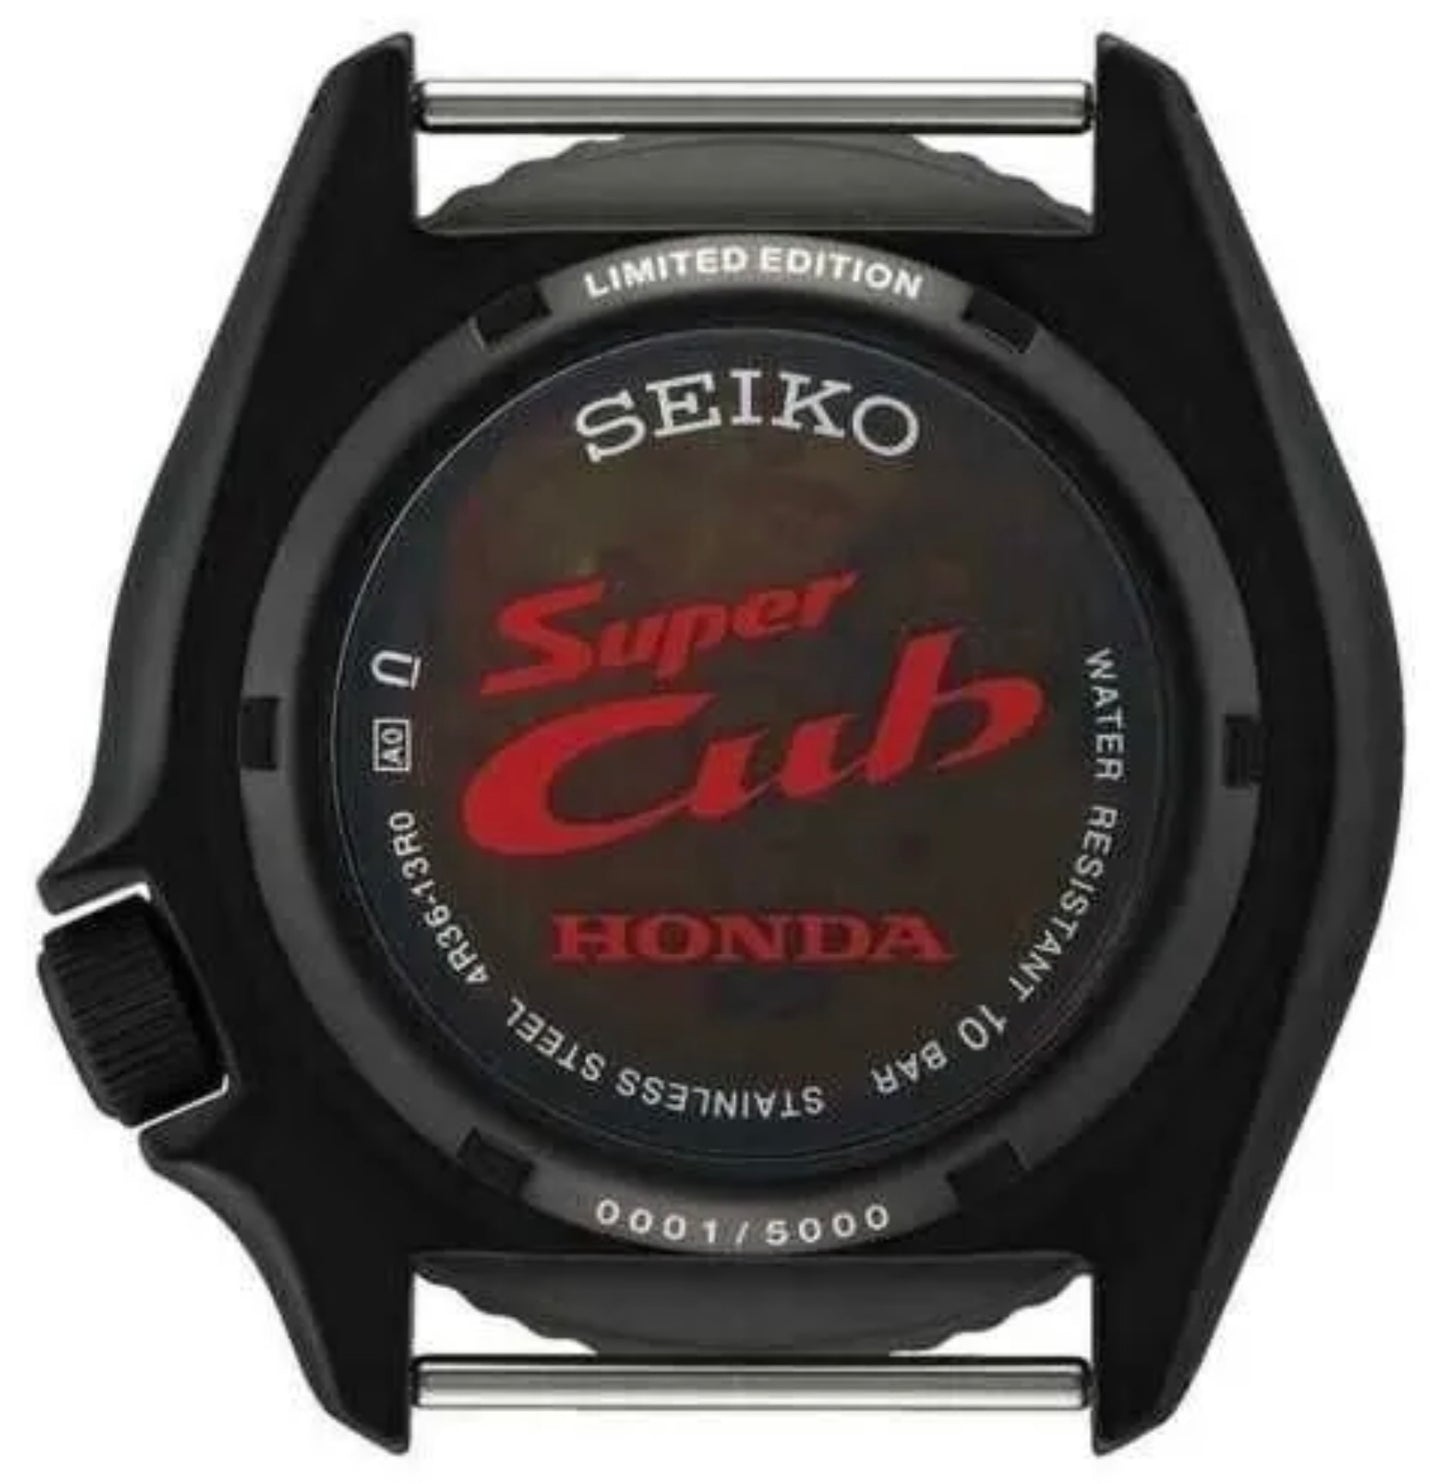 Seiko 5 Sports Honda Cub Limited Edition Men's Watch SRPJ75